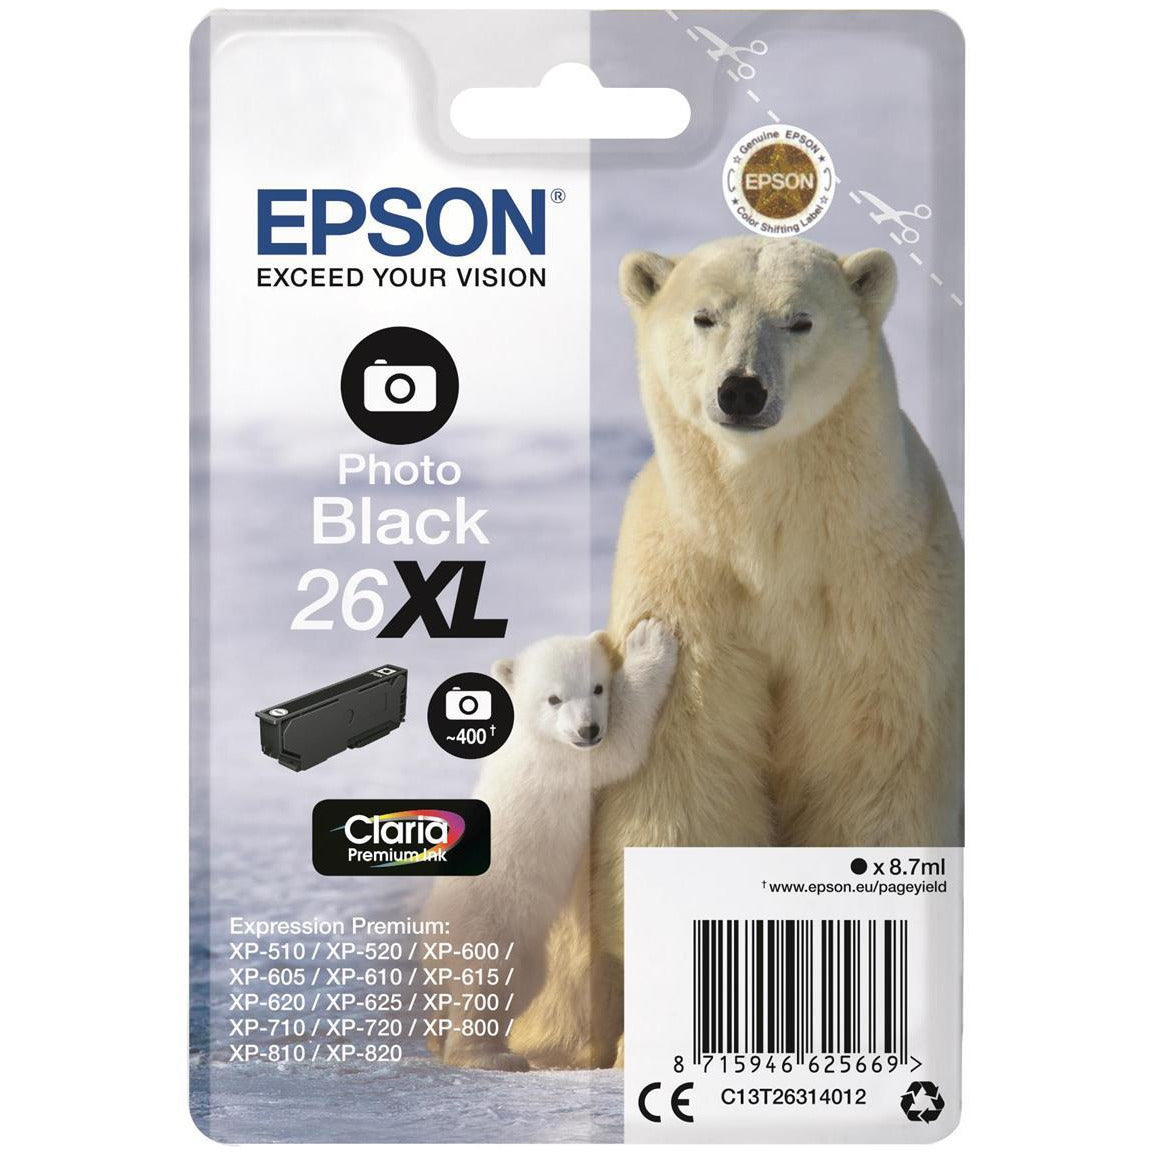 Epson XP600/700/800 Photo Bk Ink Ca 8.7ml